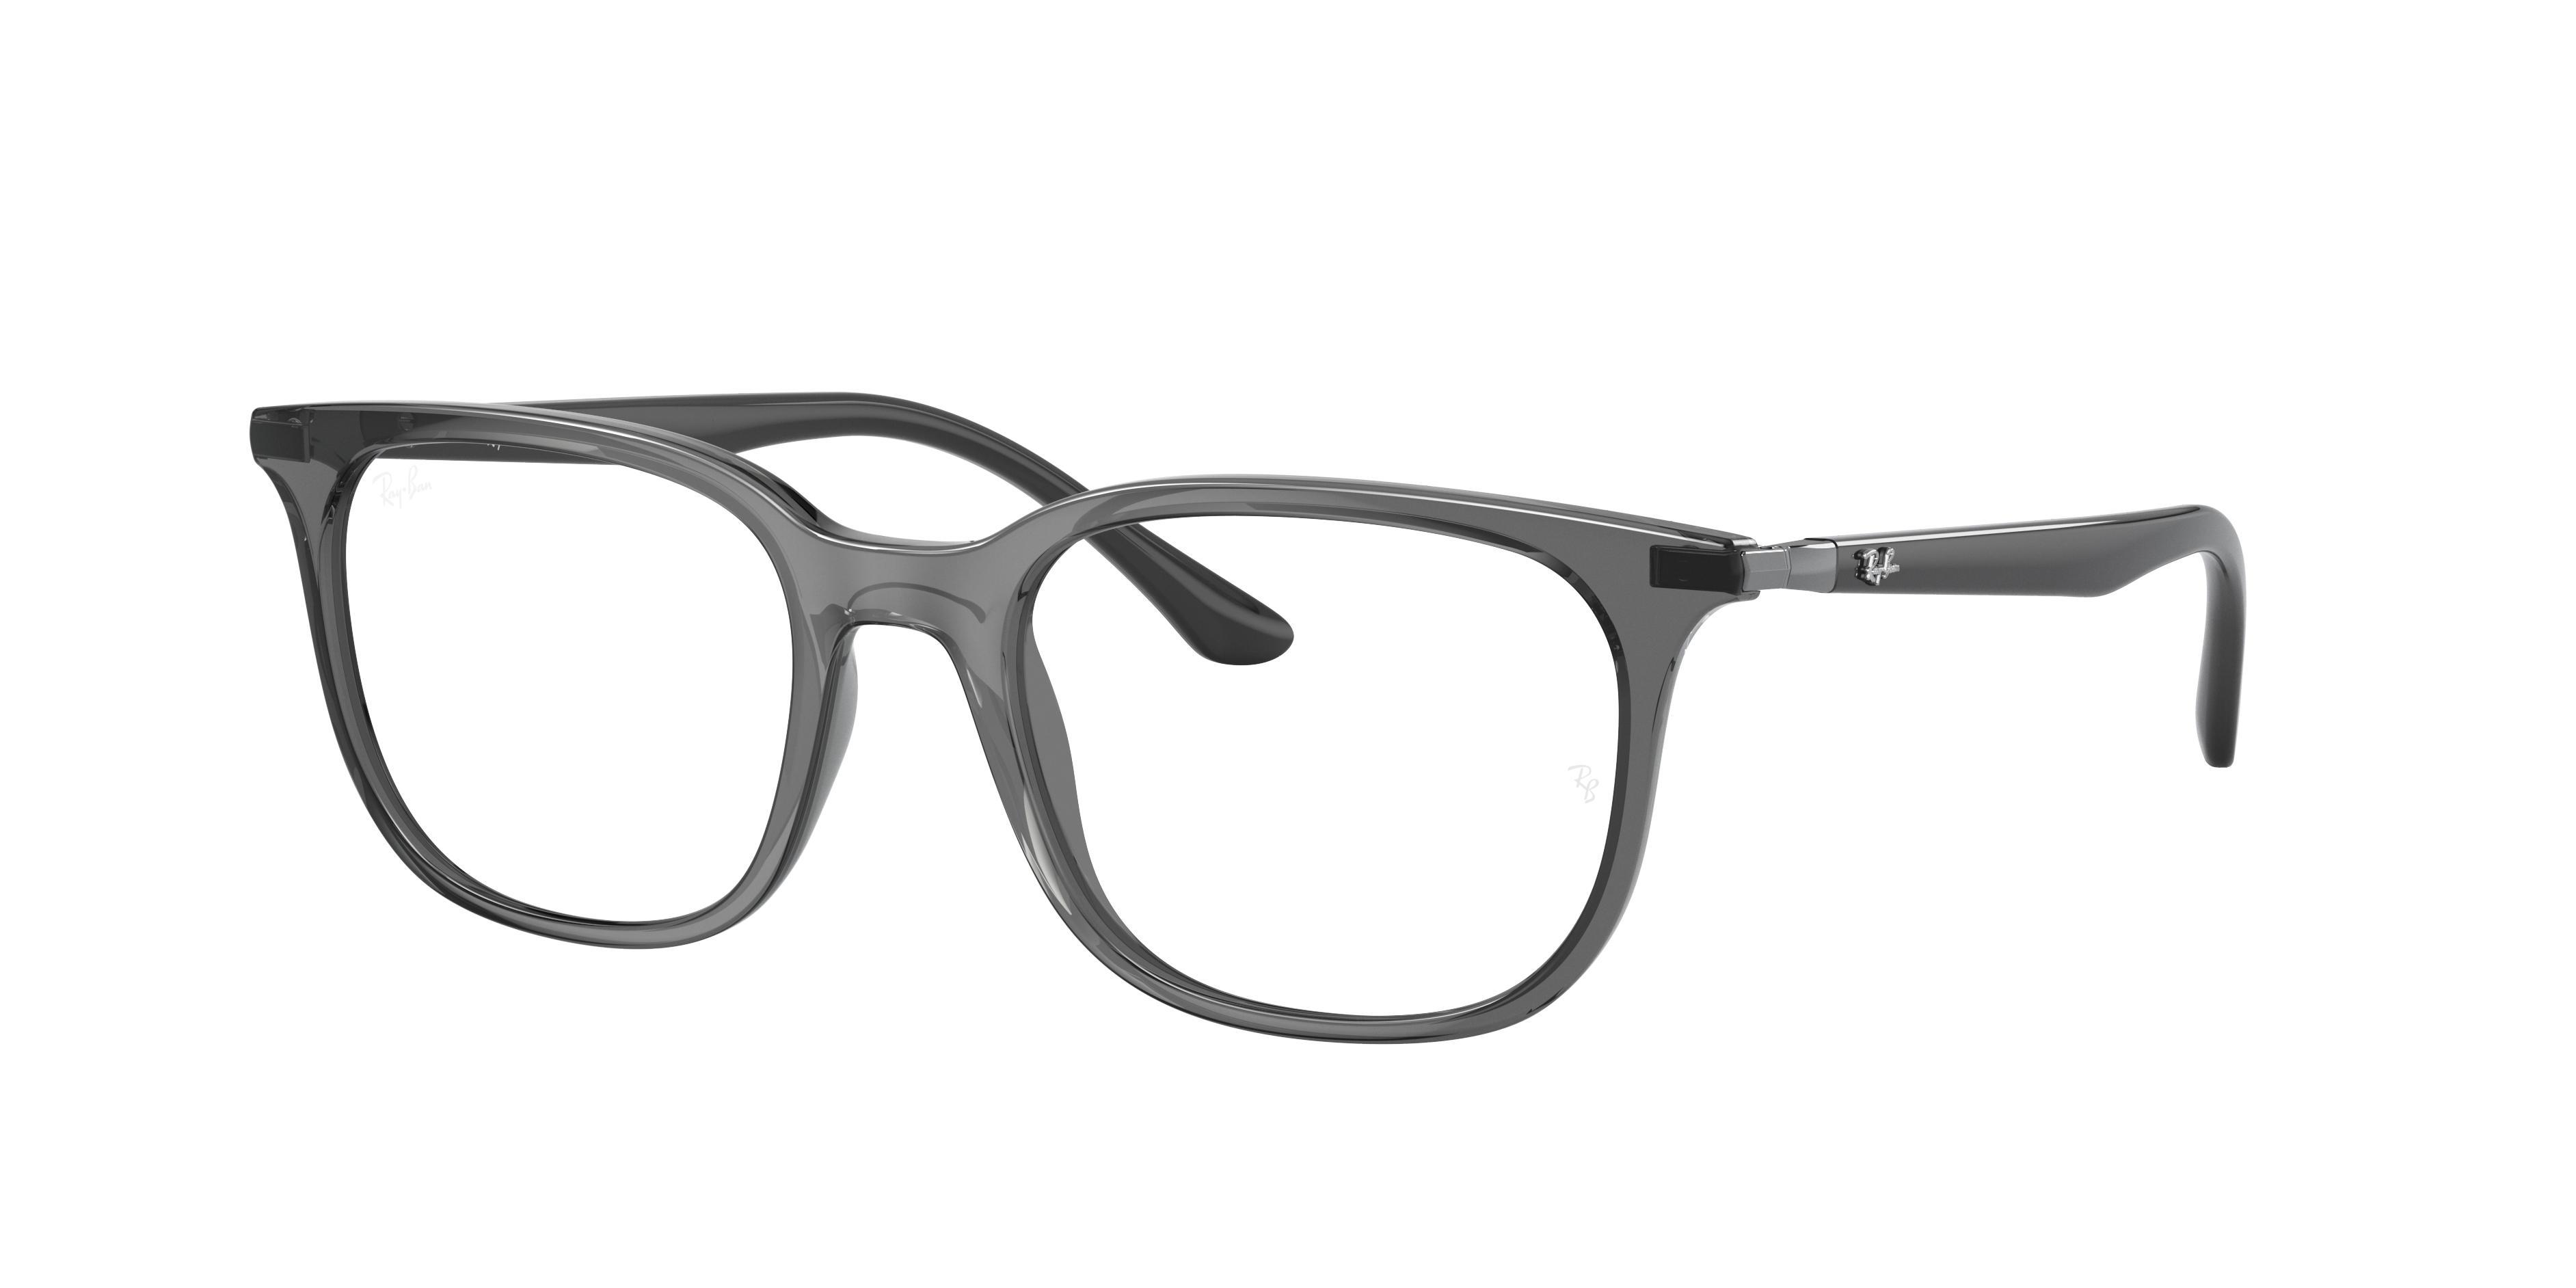 Rb7211 Optics Eyeglasses with Transparent Grey Frame | Ray-Ban®